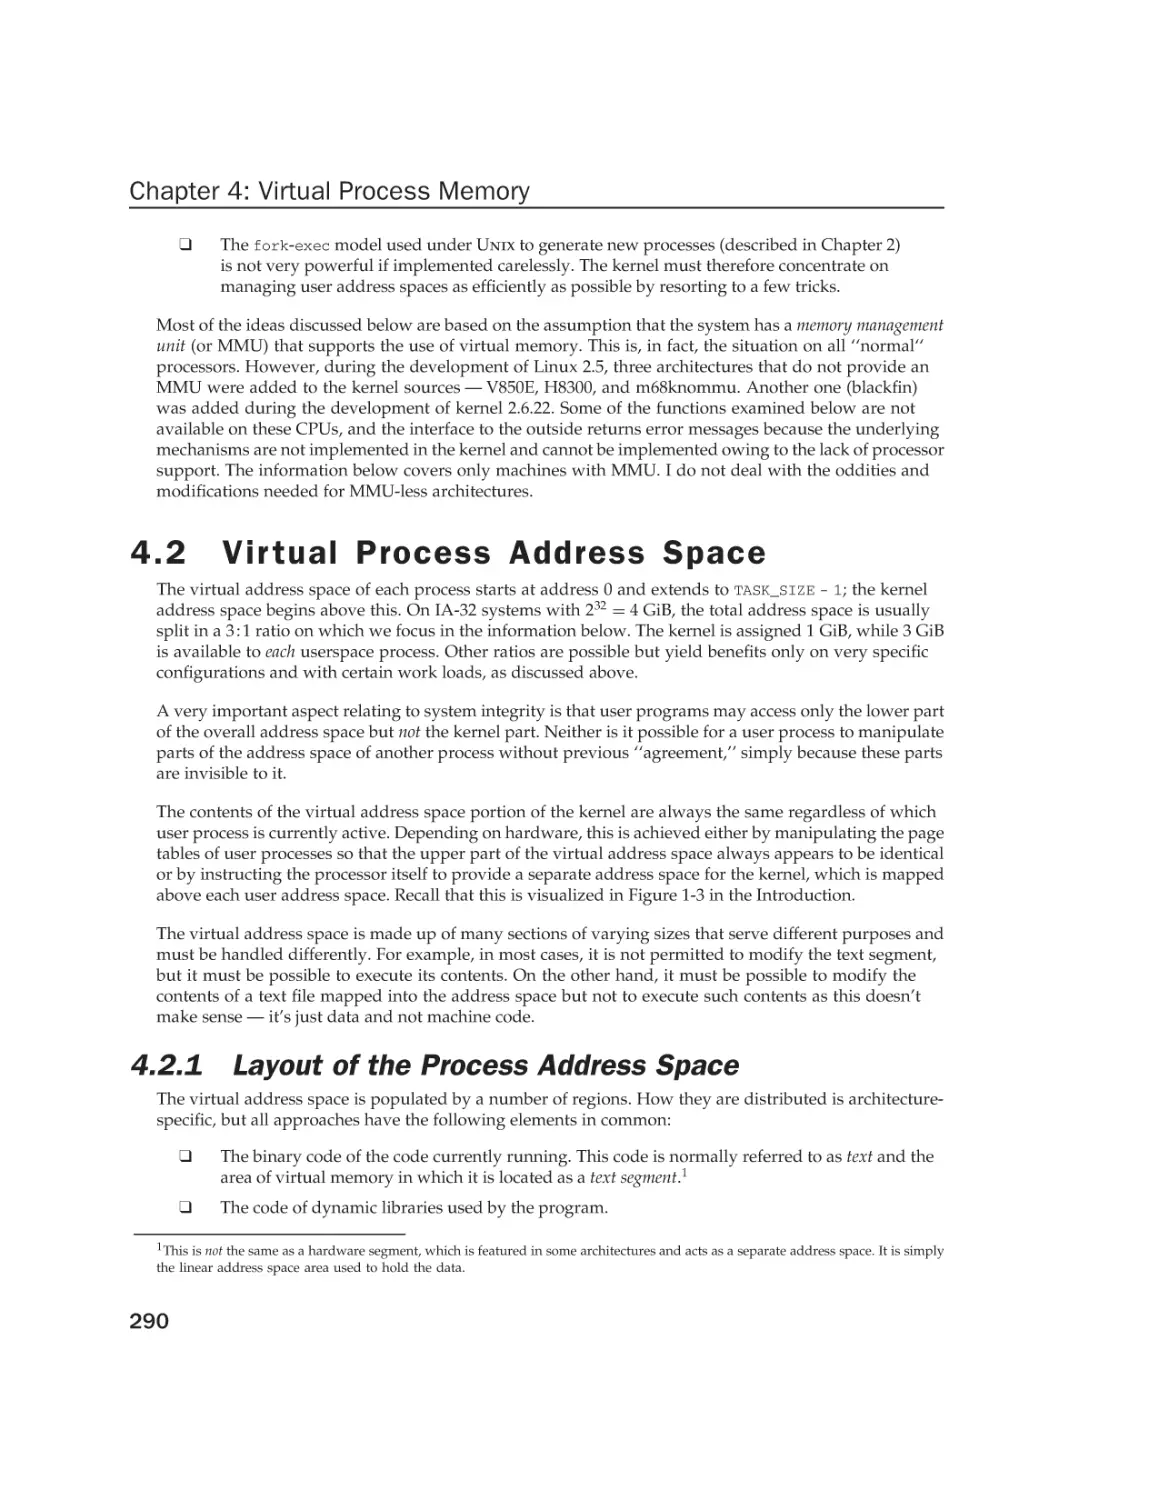 4.2 Virtual Process Address Space